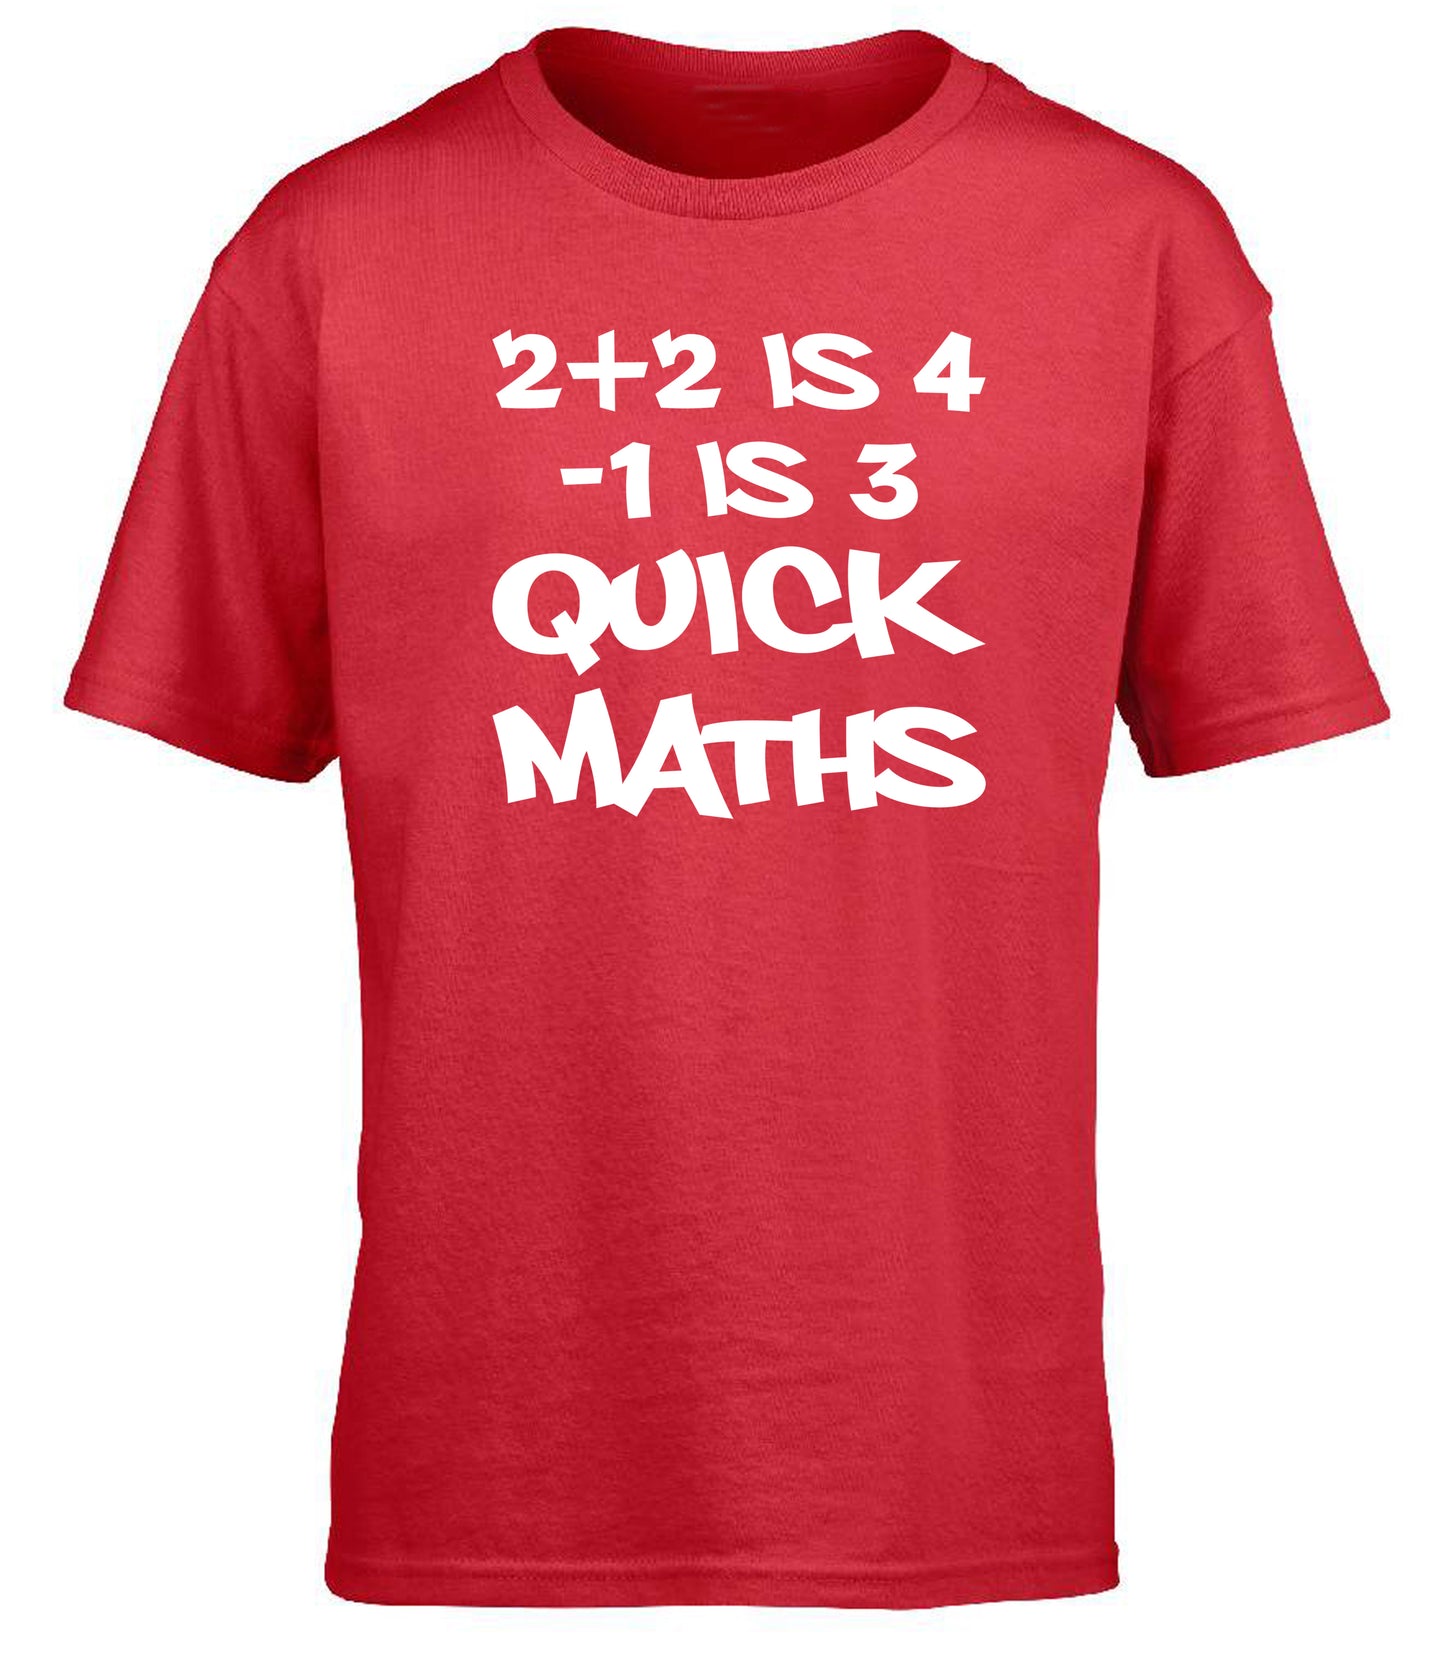 2+2 is 4-1 is 3 Quick Maths Viral Grime children's T-shirt